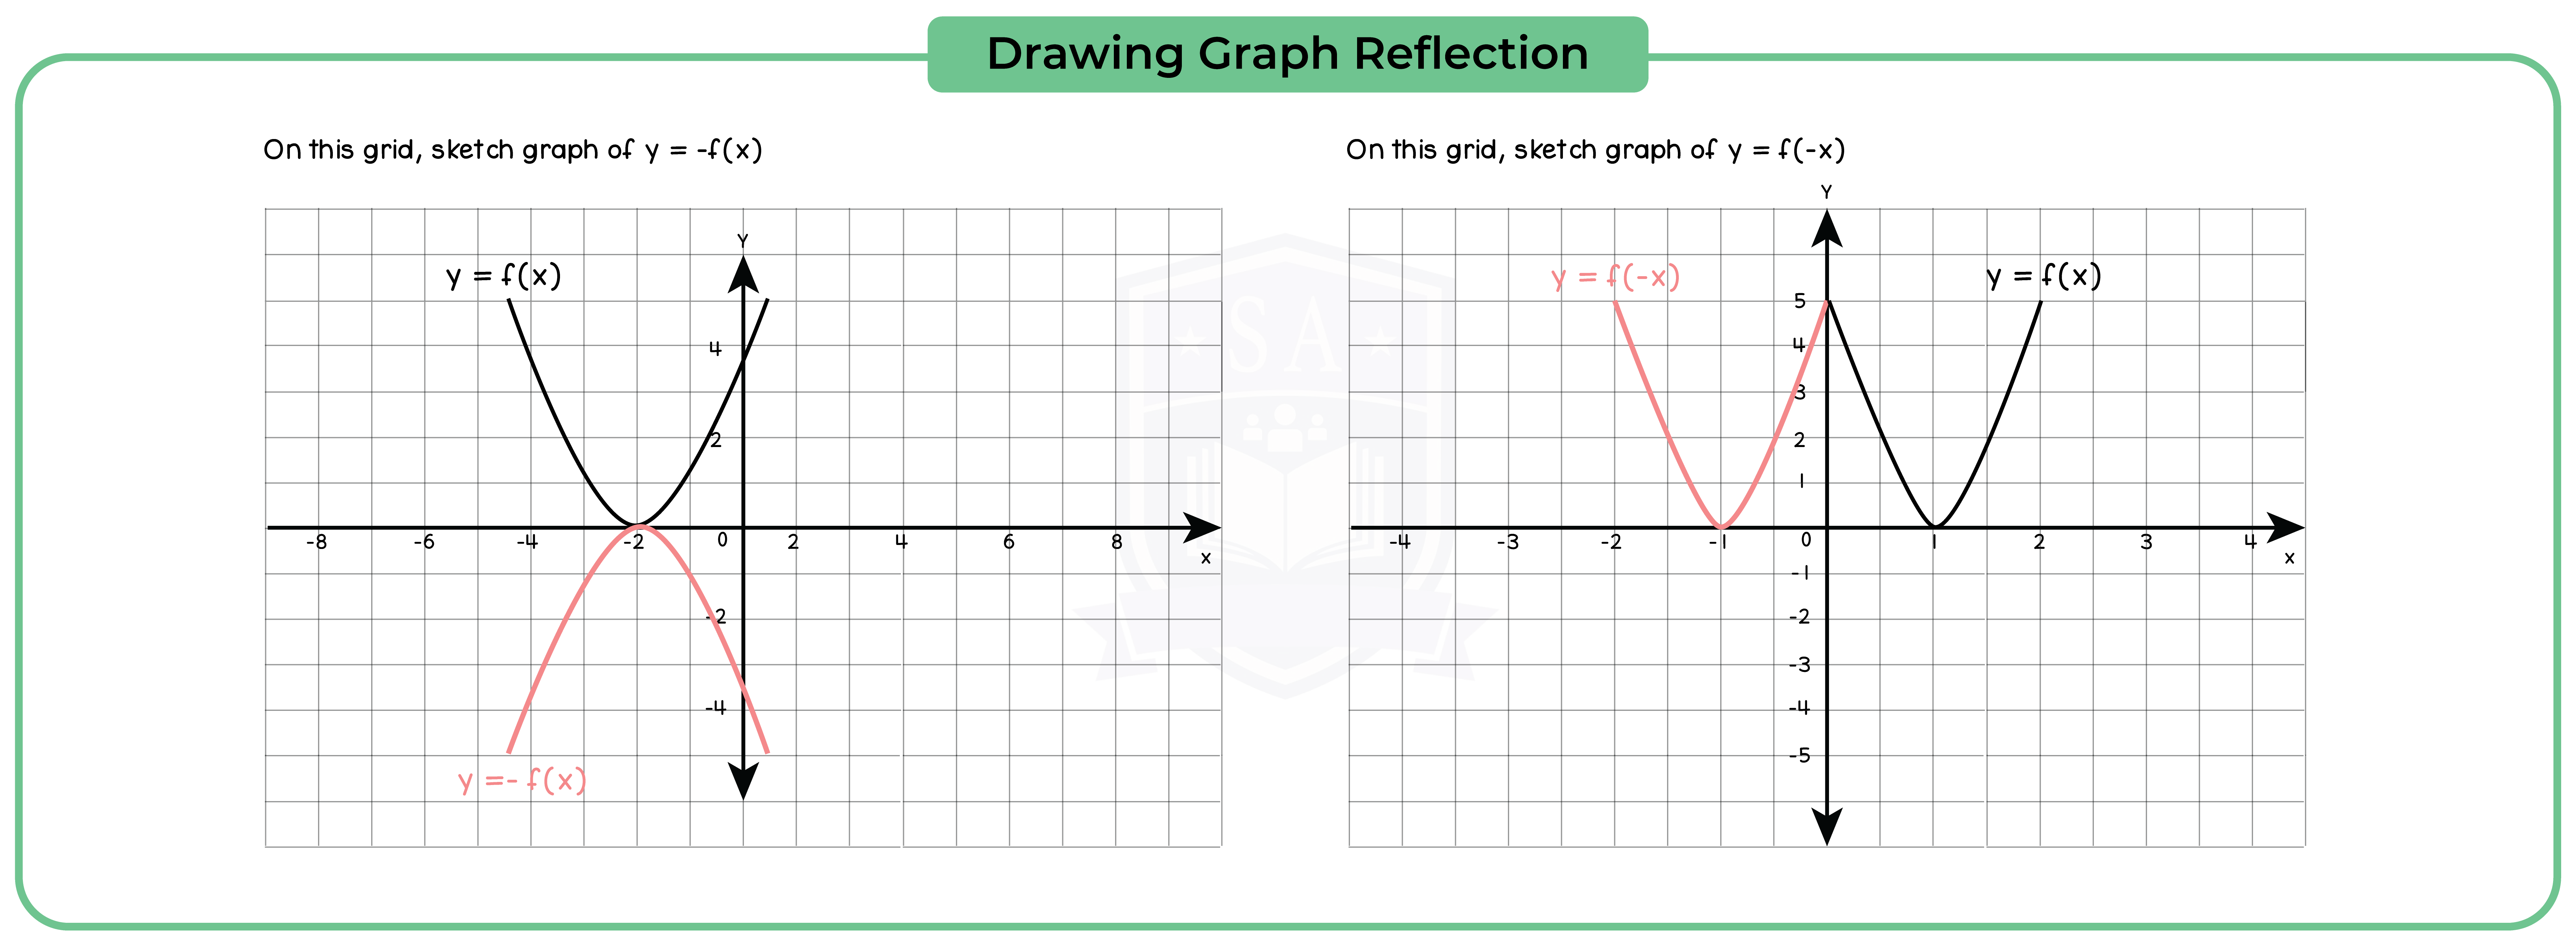 edexcel_igcse_mathematics a_topic 23_graphs_021_Drawing Graph Reflection